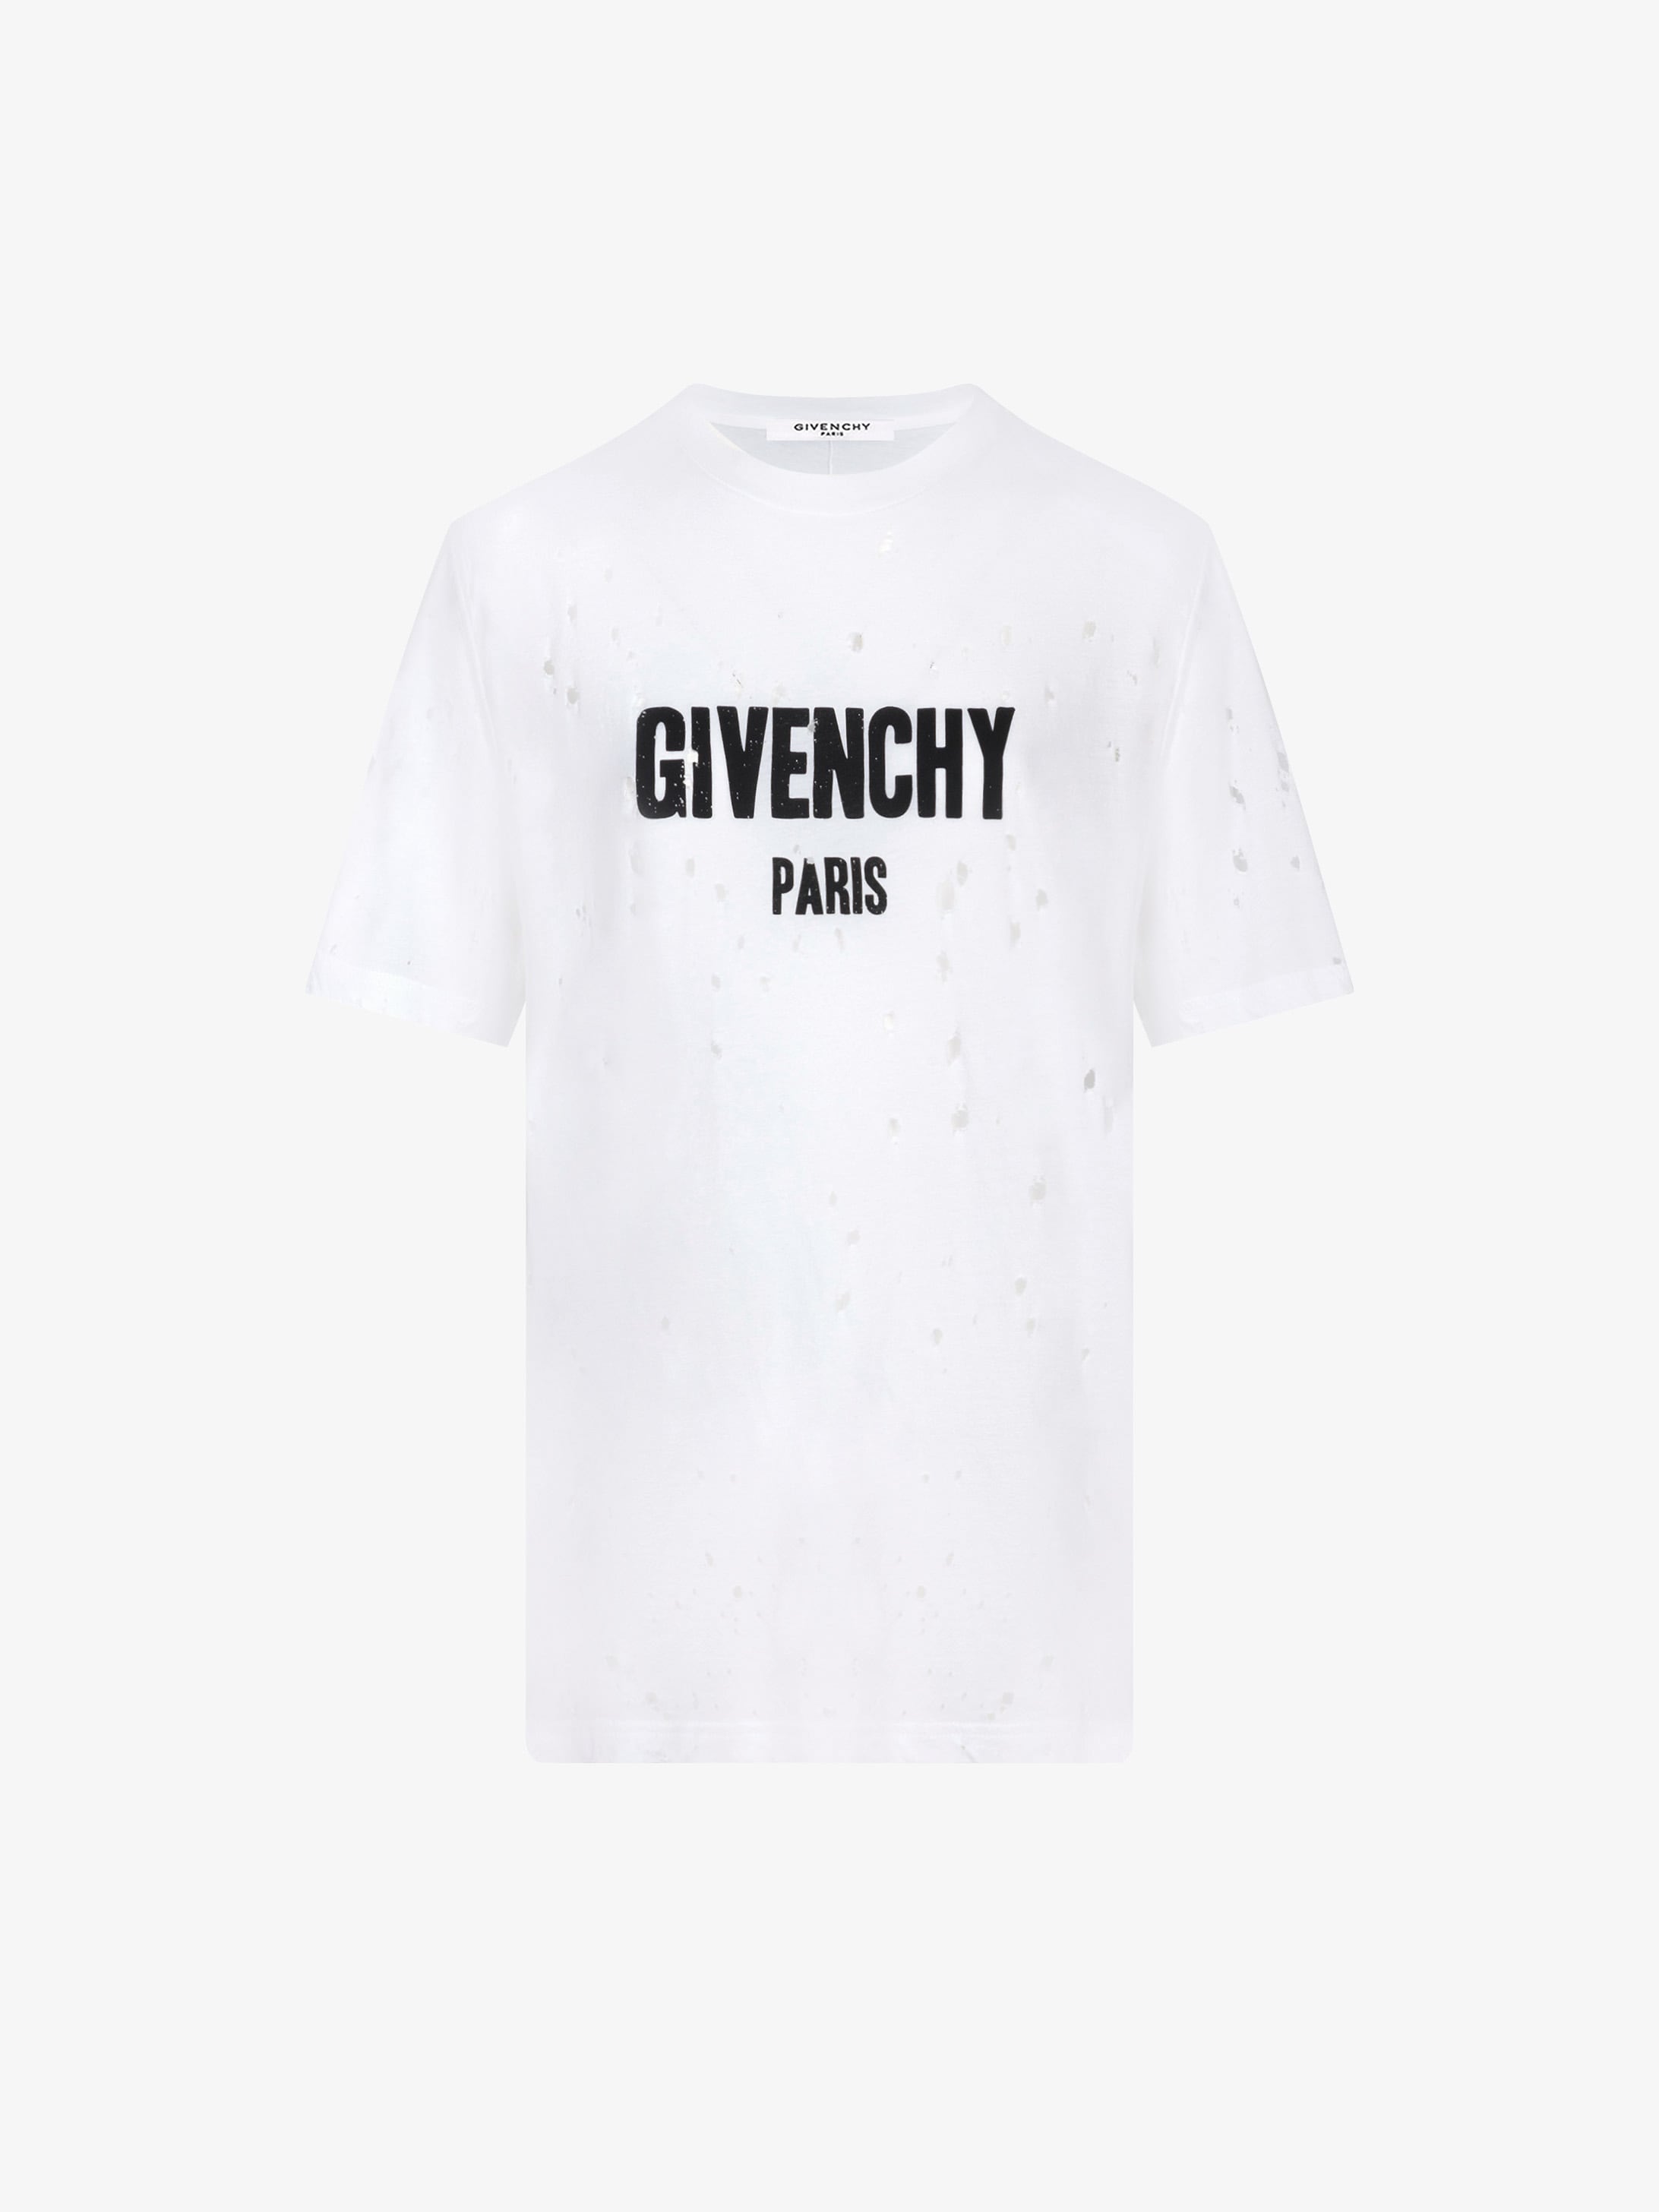 givenchy paris shirt white